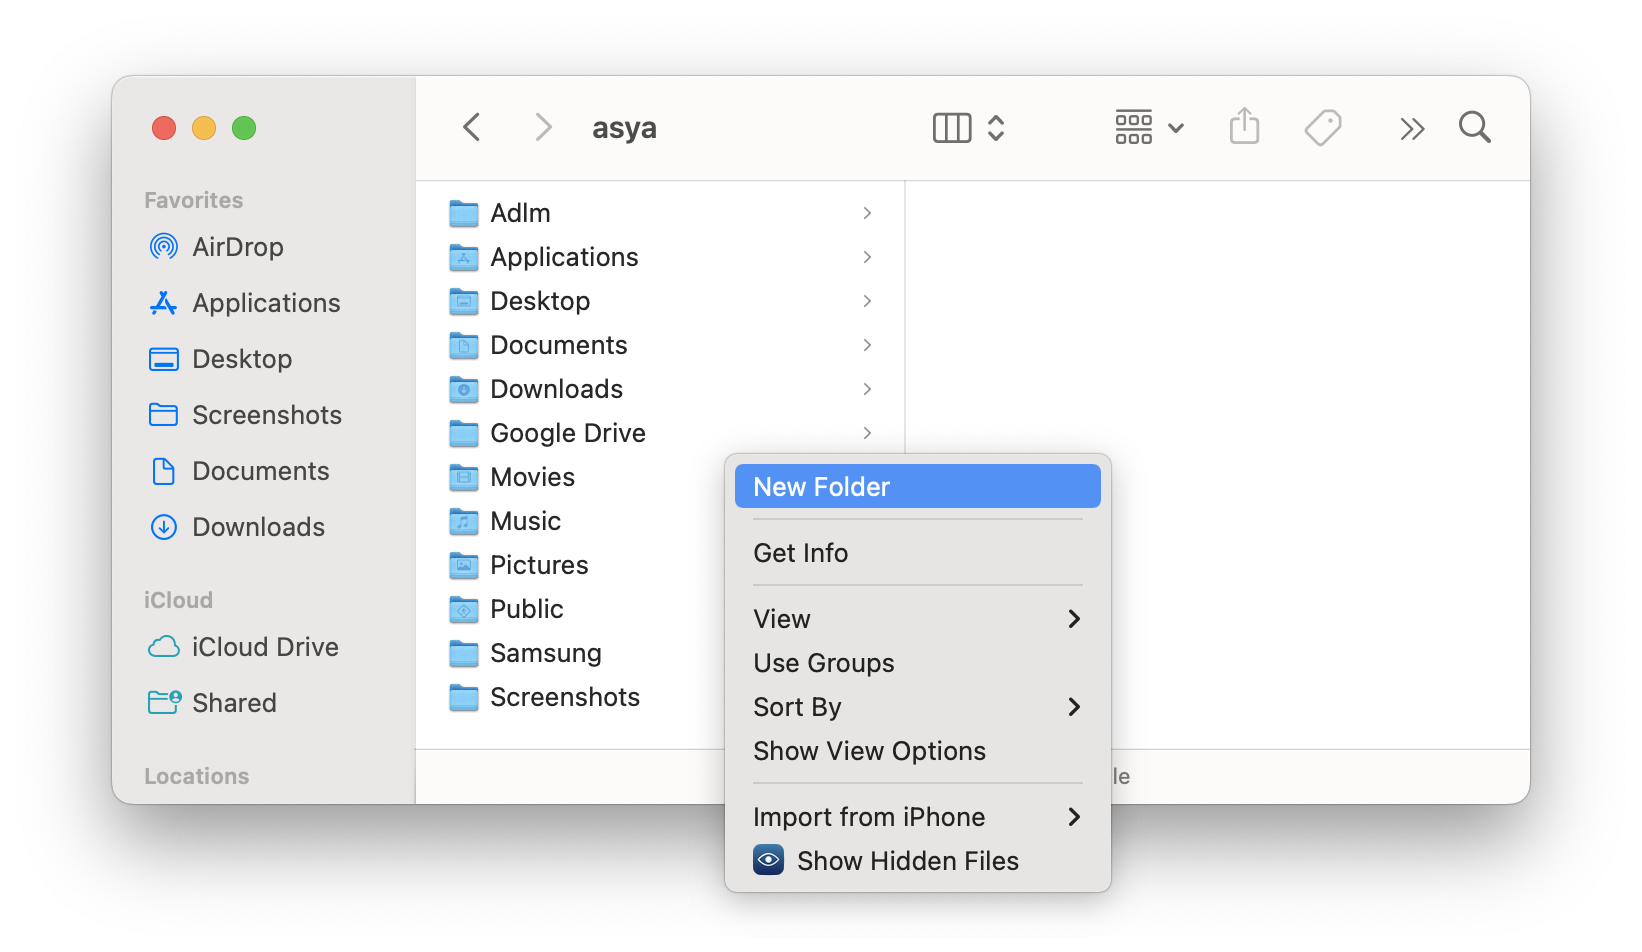 Choosing New Folder command from the Finder context menu